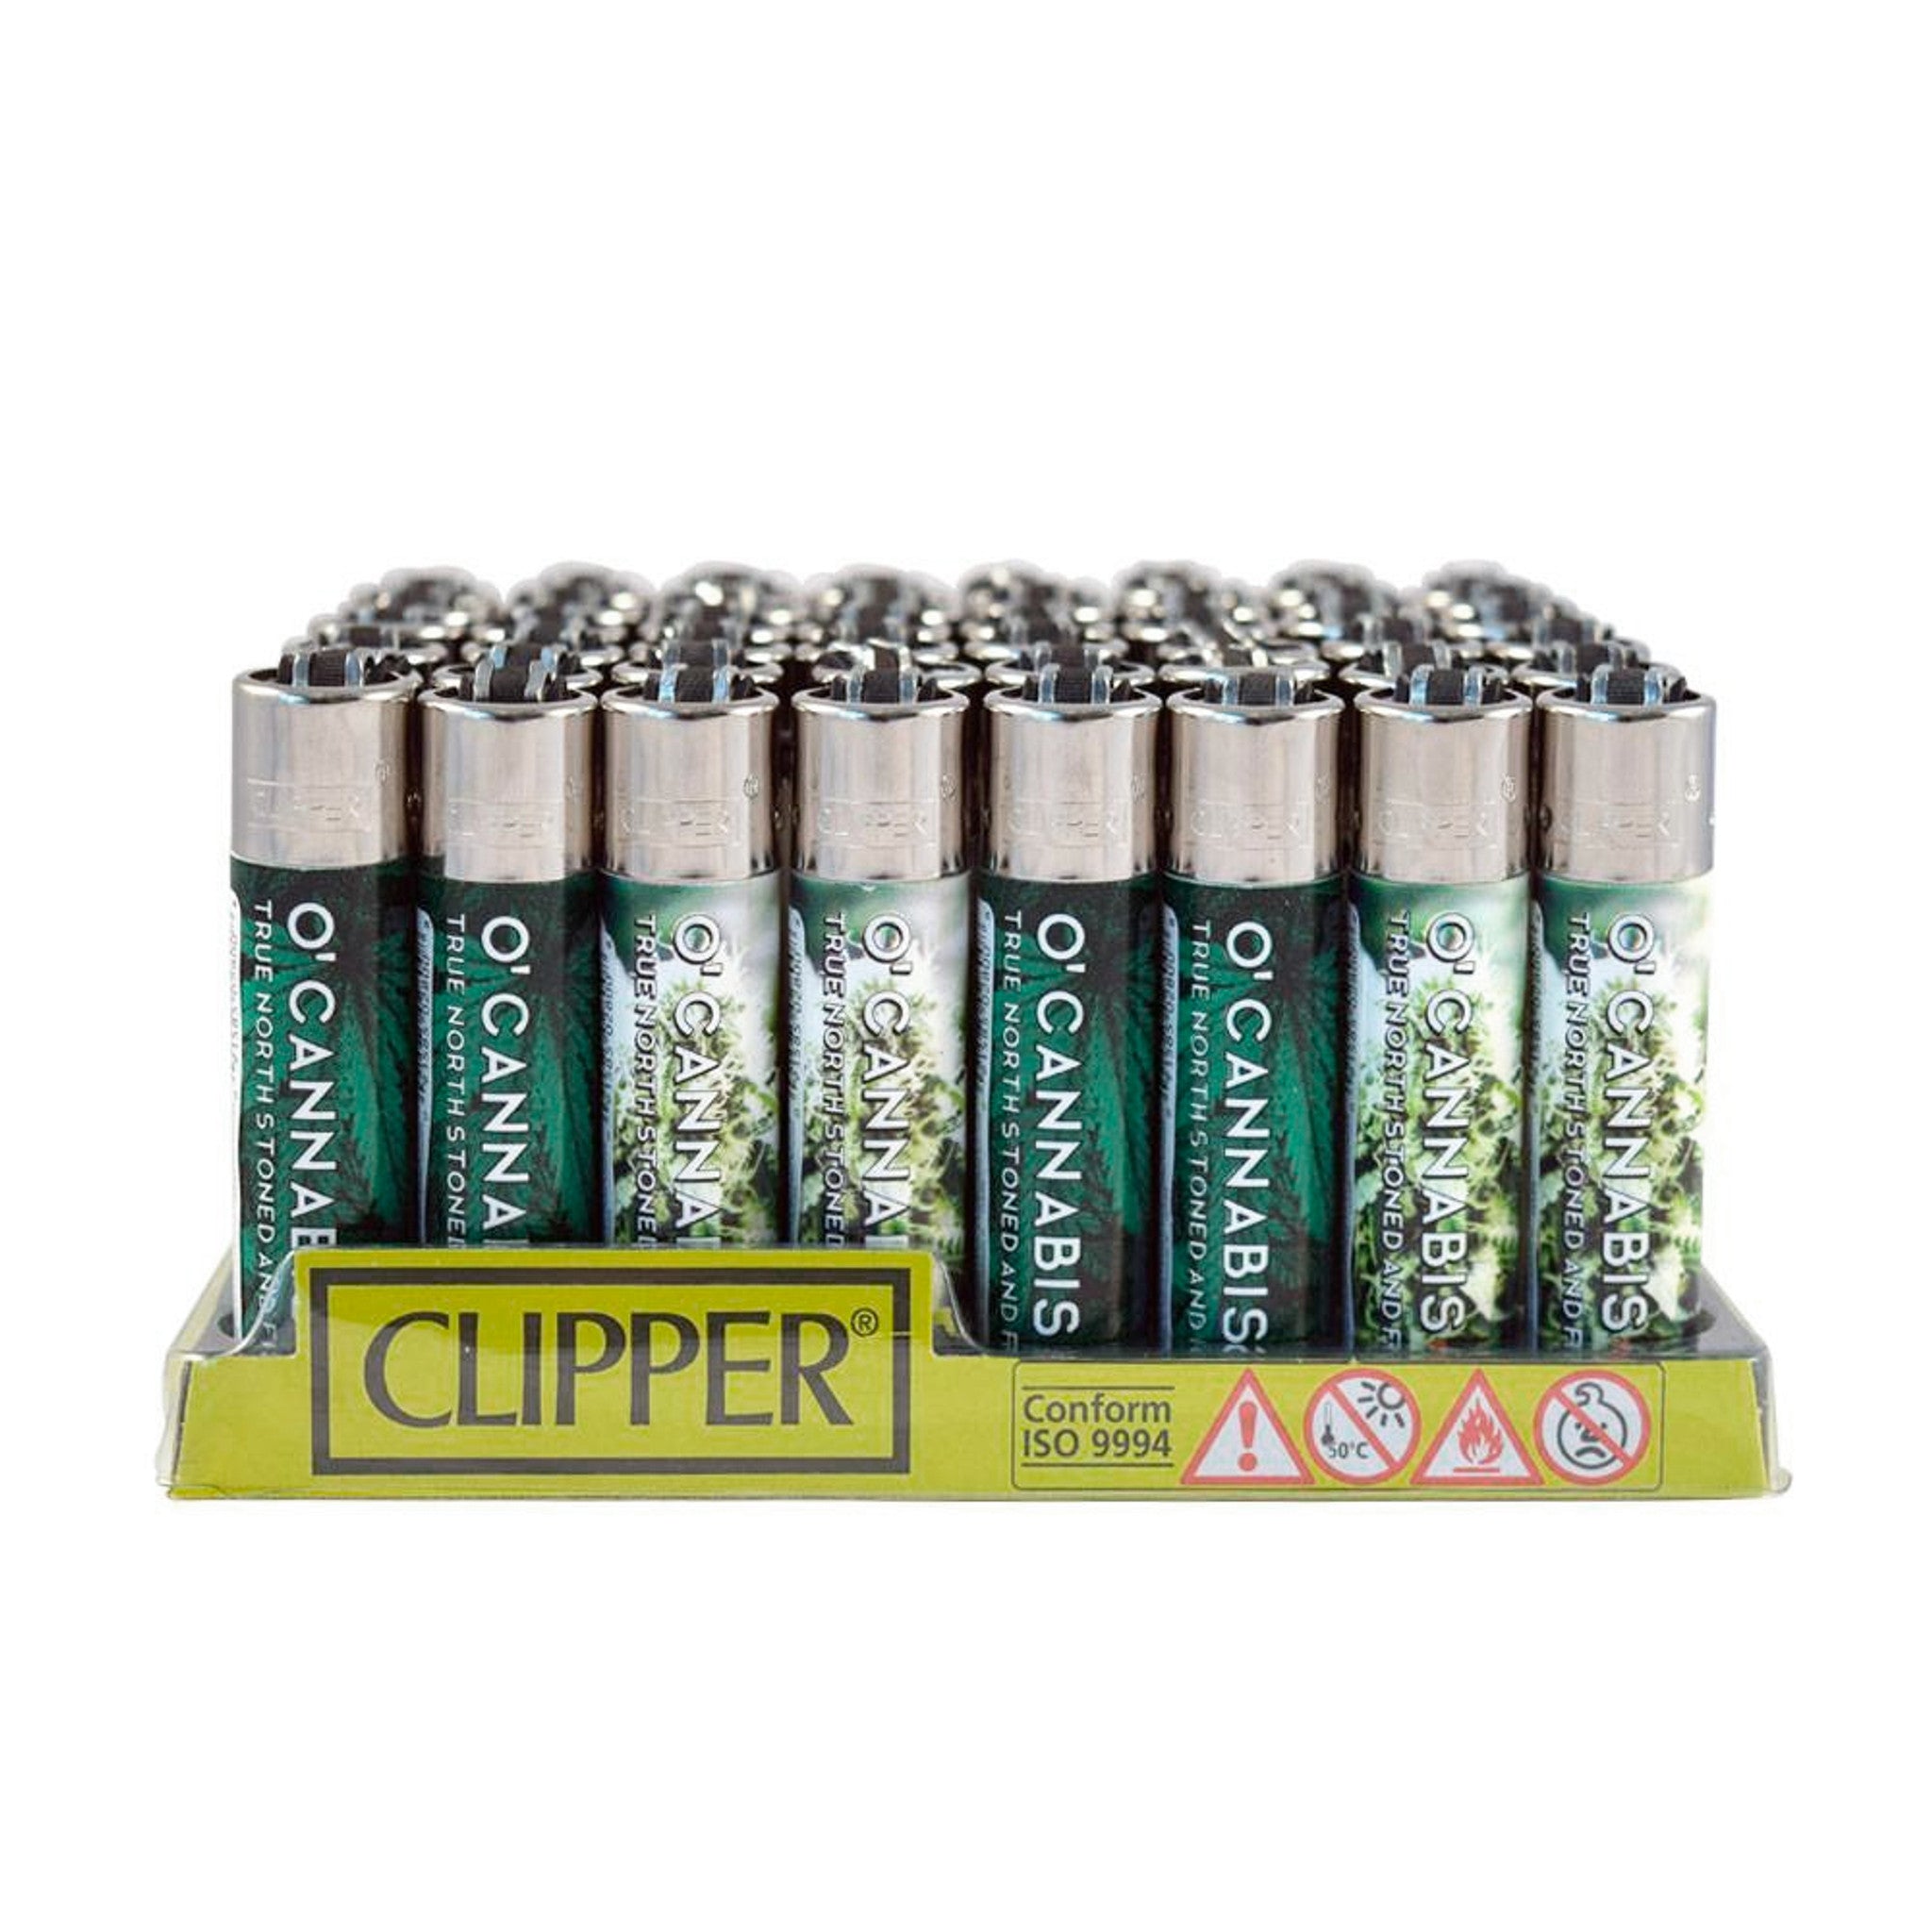 Clipper O' Cannabis Lighters